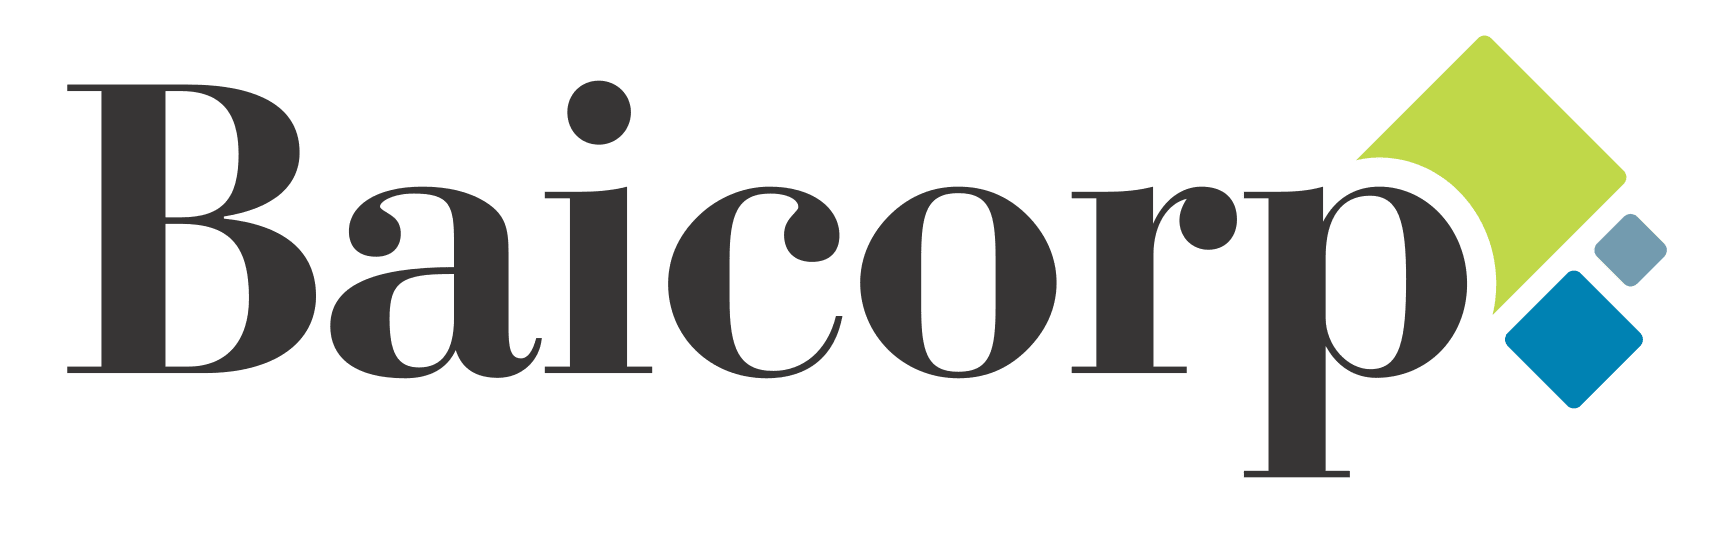 baicorp logo1